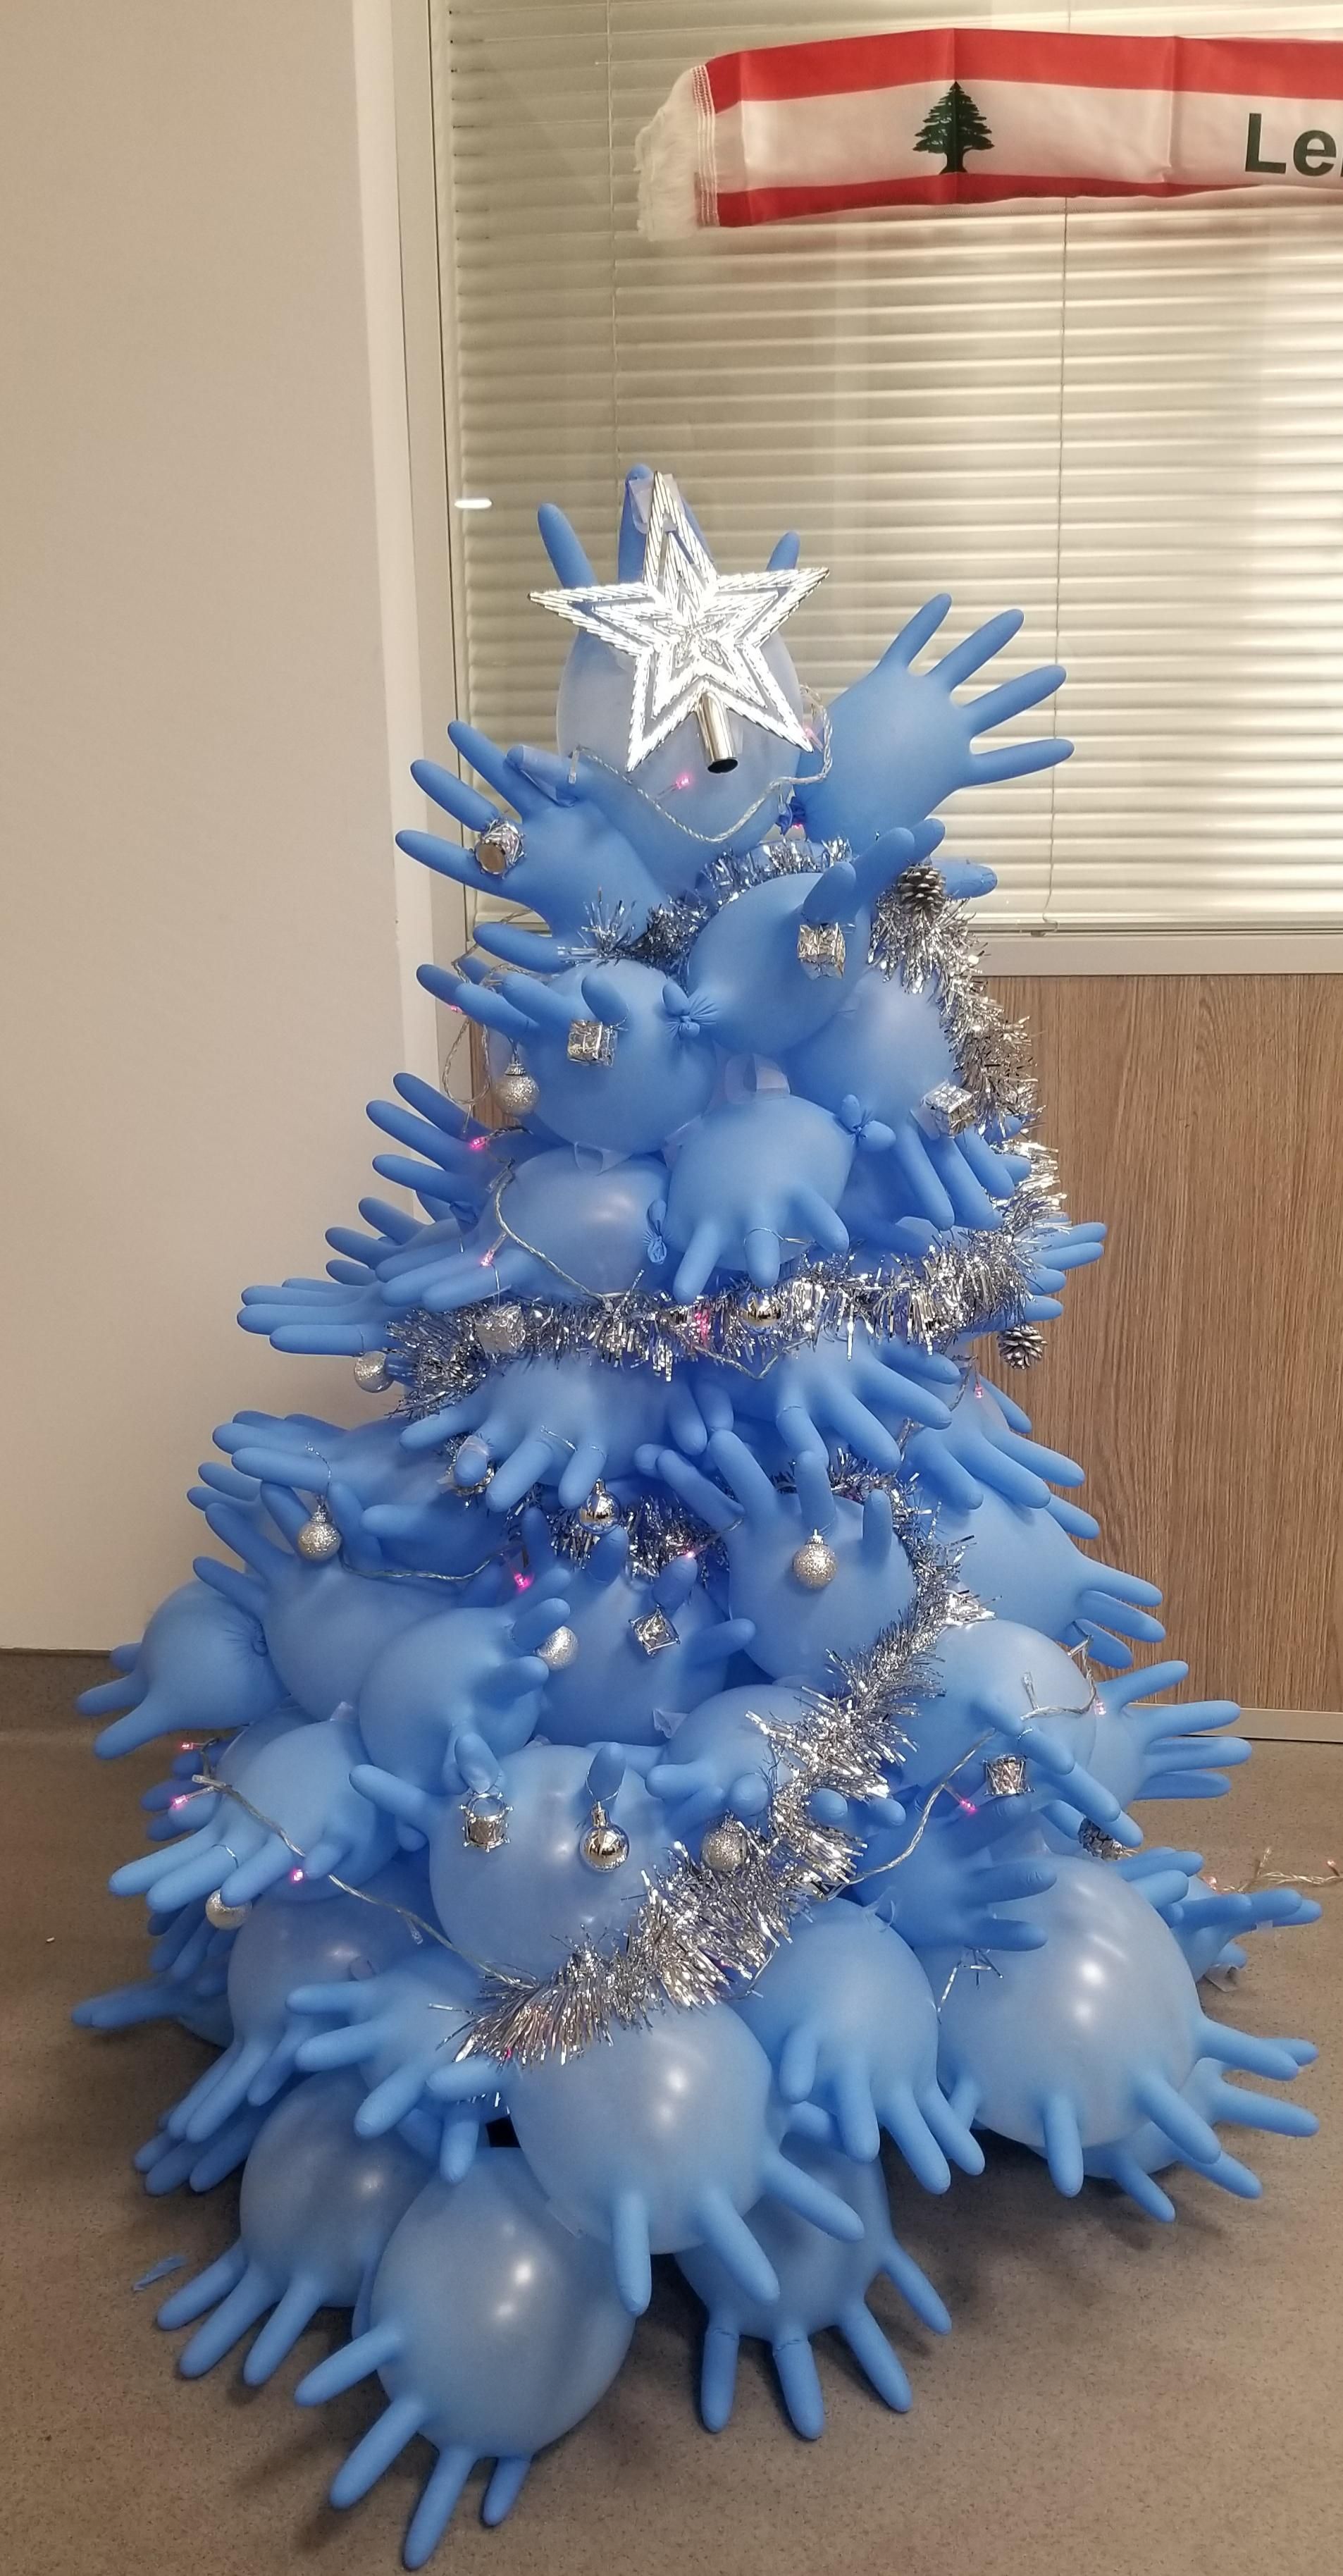 Our low-budget hospital Christmas tree